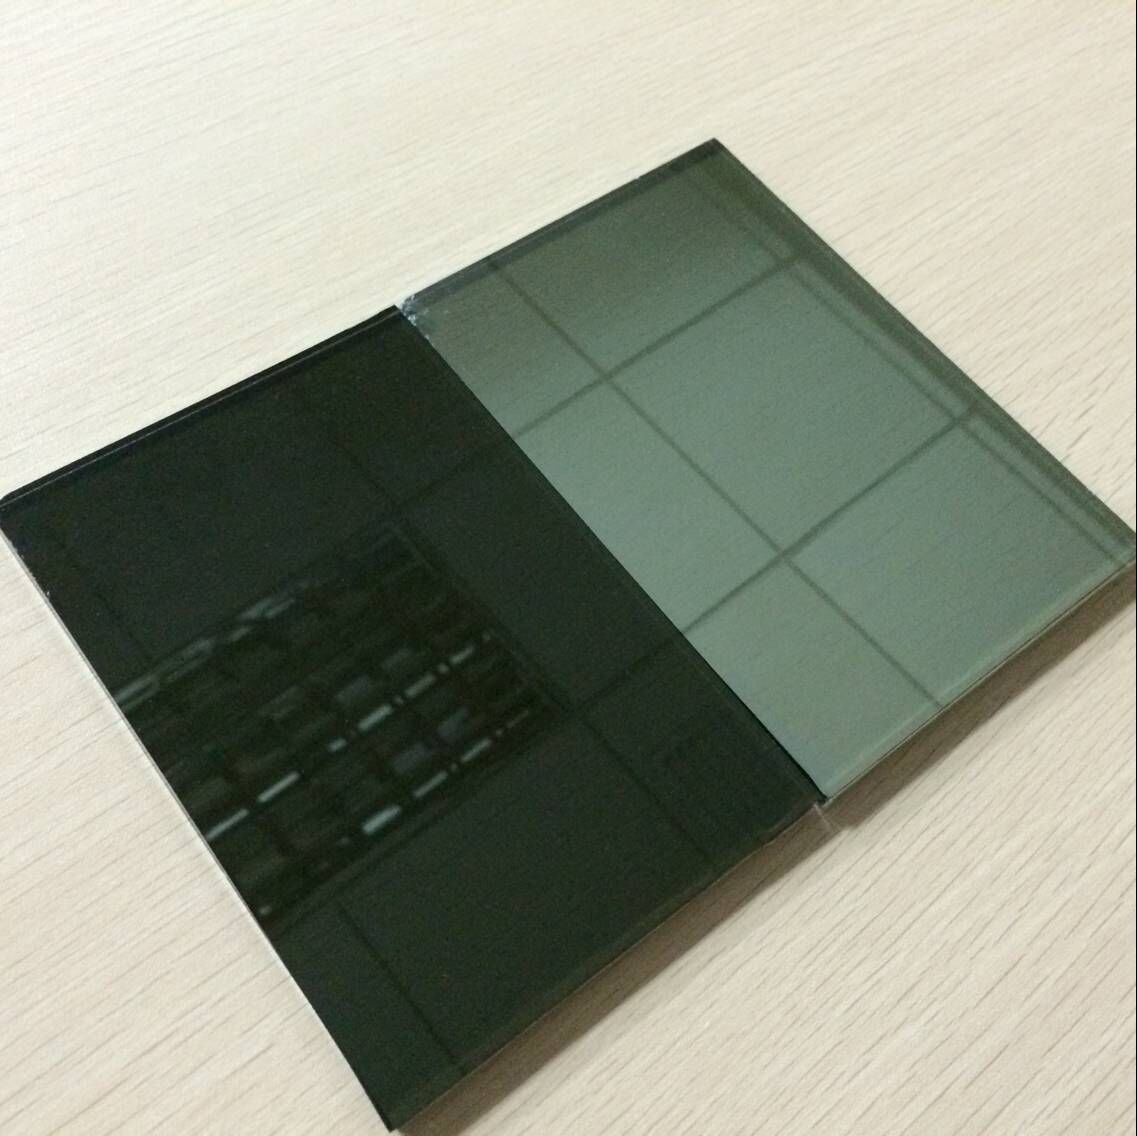 China 6mm dark grey reflective glass supplier,6mm black reflective glass price